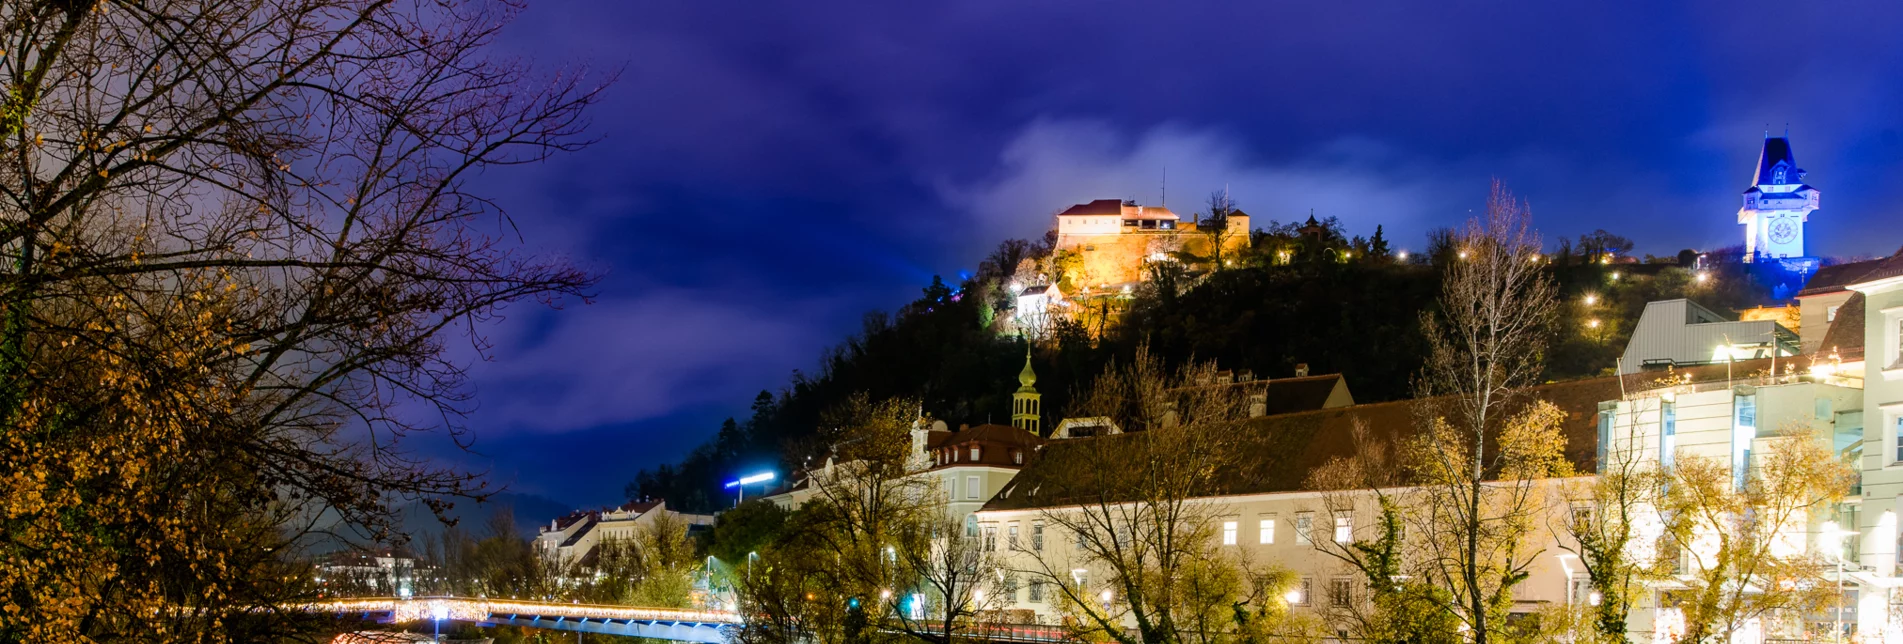 Blick auf den Grazer Schlossberg | © TV Erlebnisregion Graz | Mias Photoart